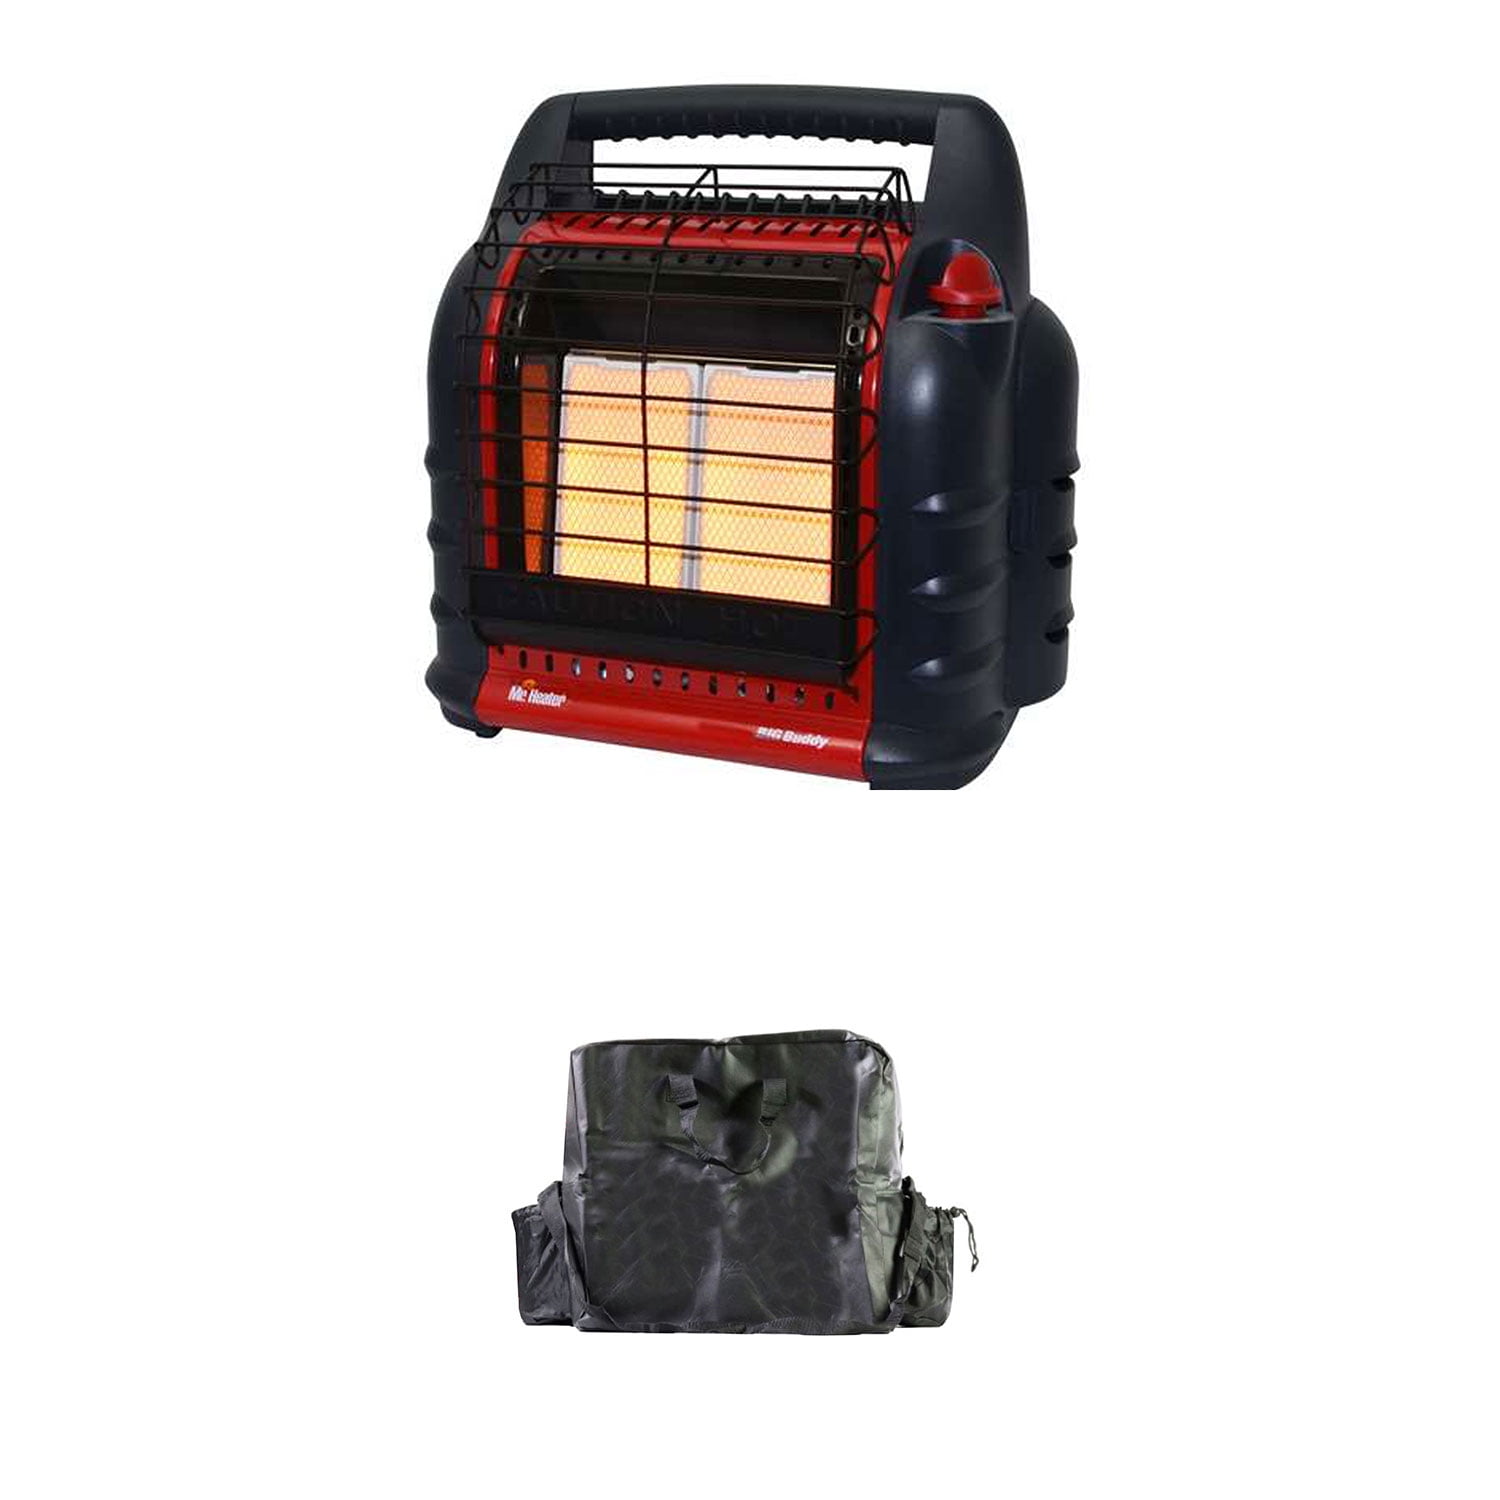 T-8 Heater BIG Buddy 18,000 BTU Max Indoor Safe Radiant Heater F274805 Heater Mr Mr 